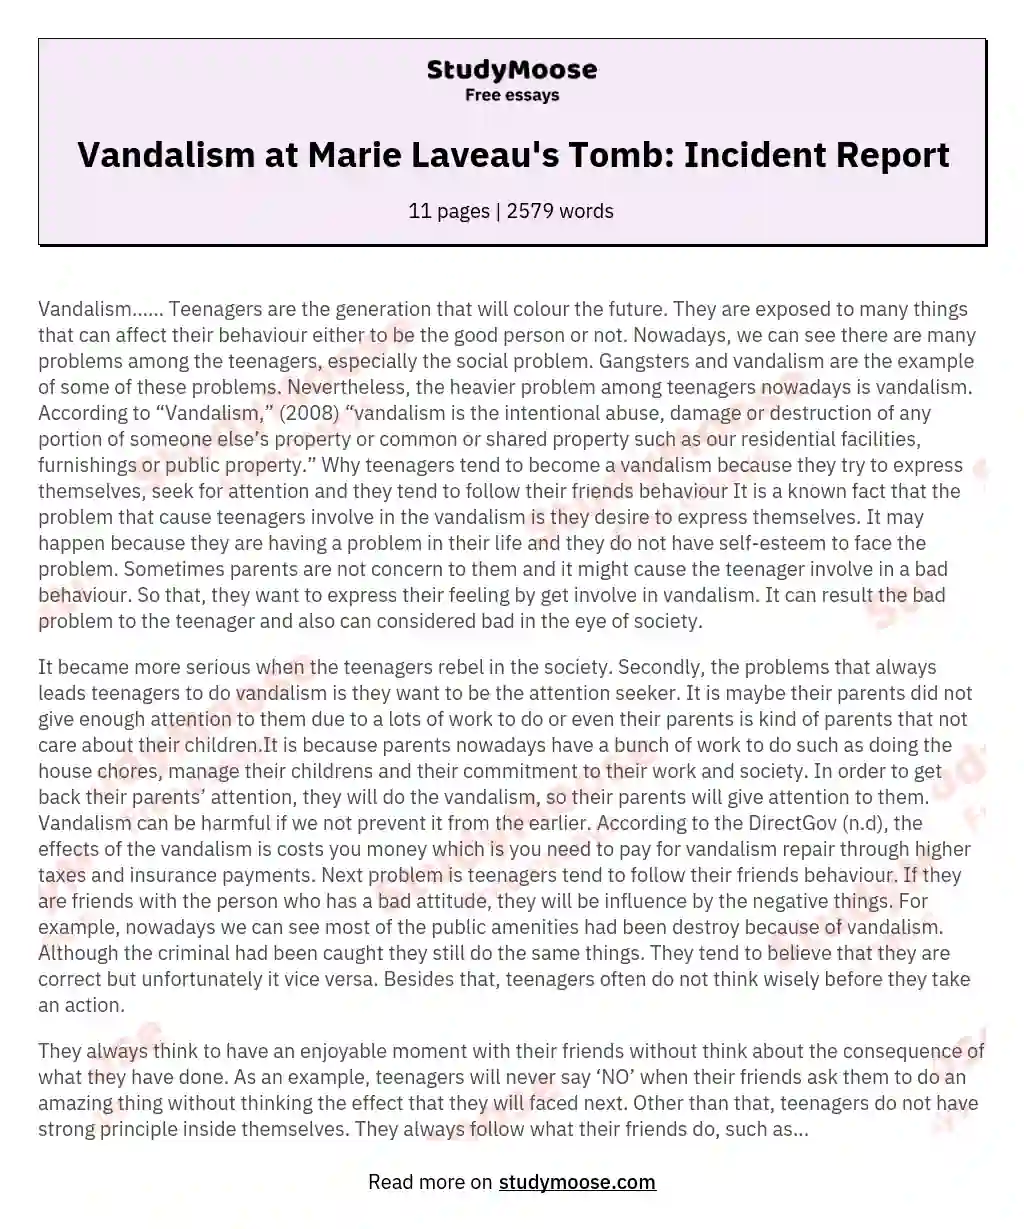 Vandalism at Marie Laveau's Tomb: Incident Report essay